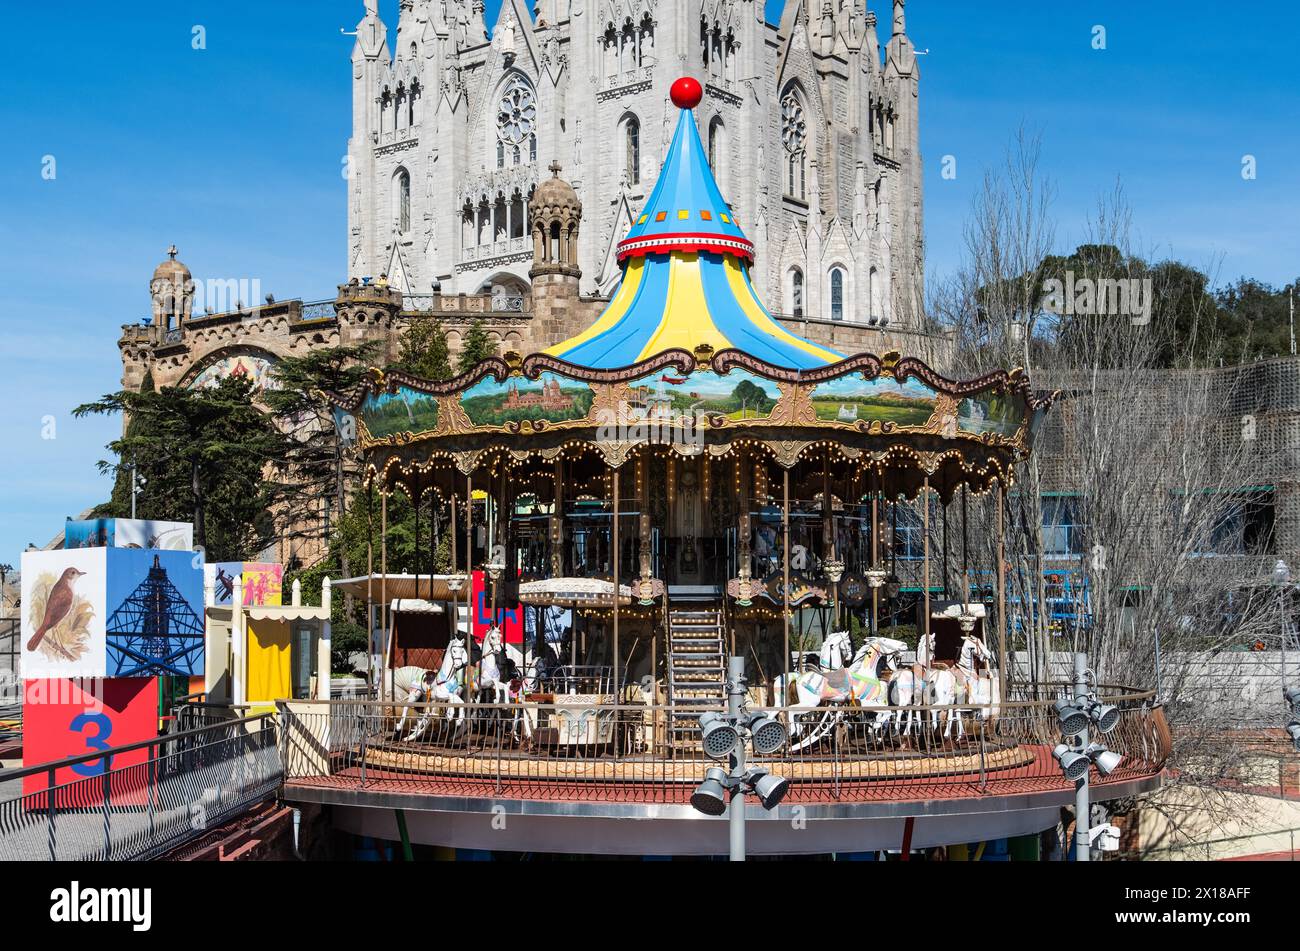 Parc d'atraccions Tibidabo amusement park and Expiatori del Sagrat Cor church in Barcelona, Spain Stock Photo